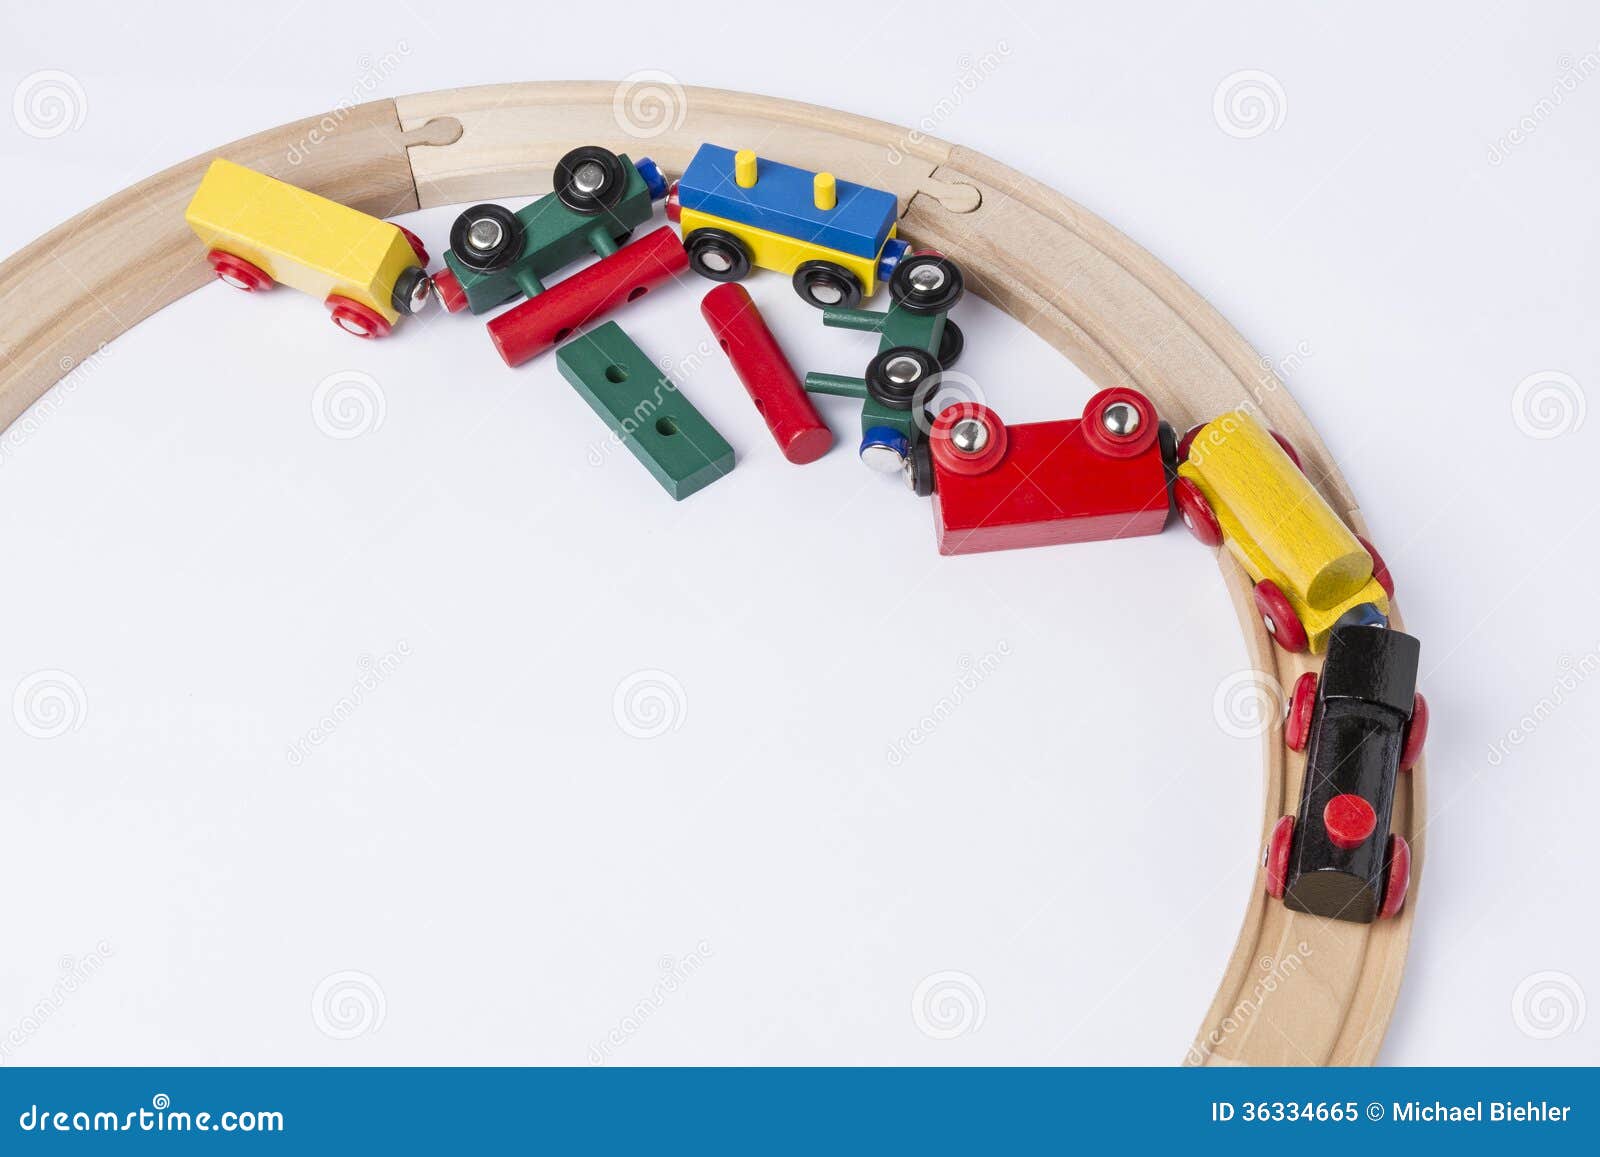 train derailment clip art - photo #4